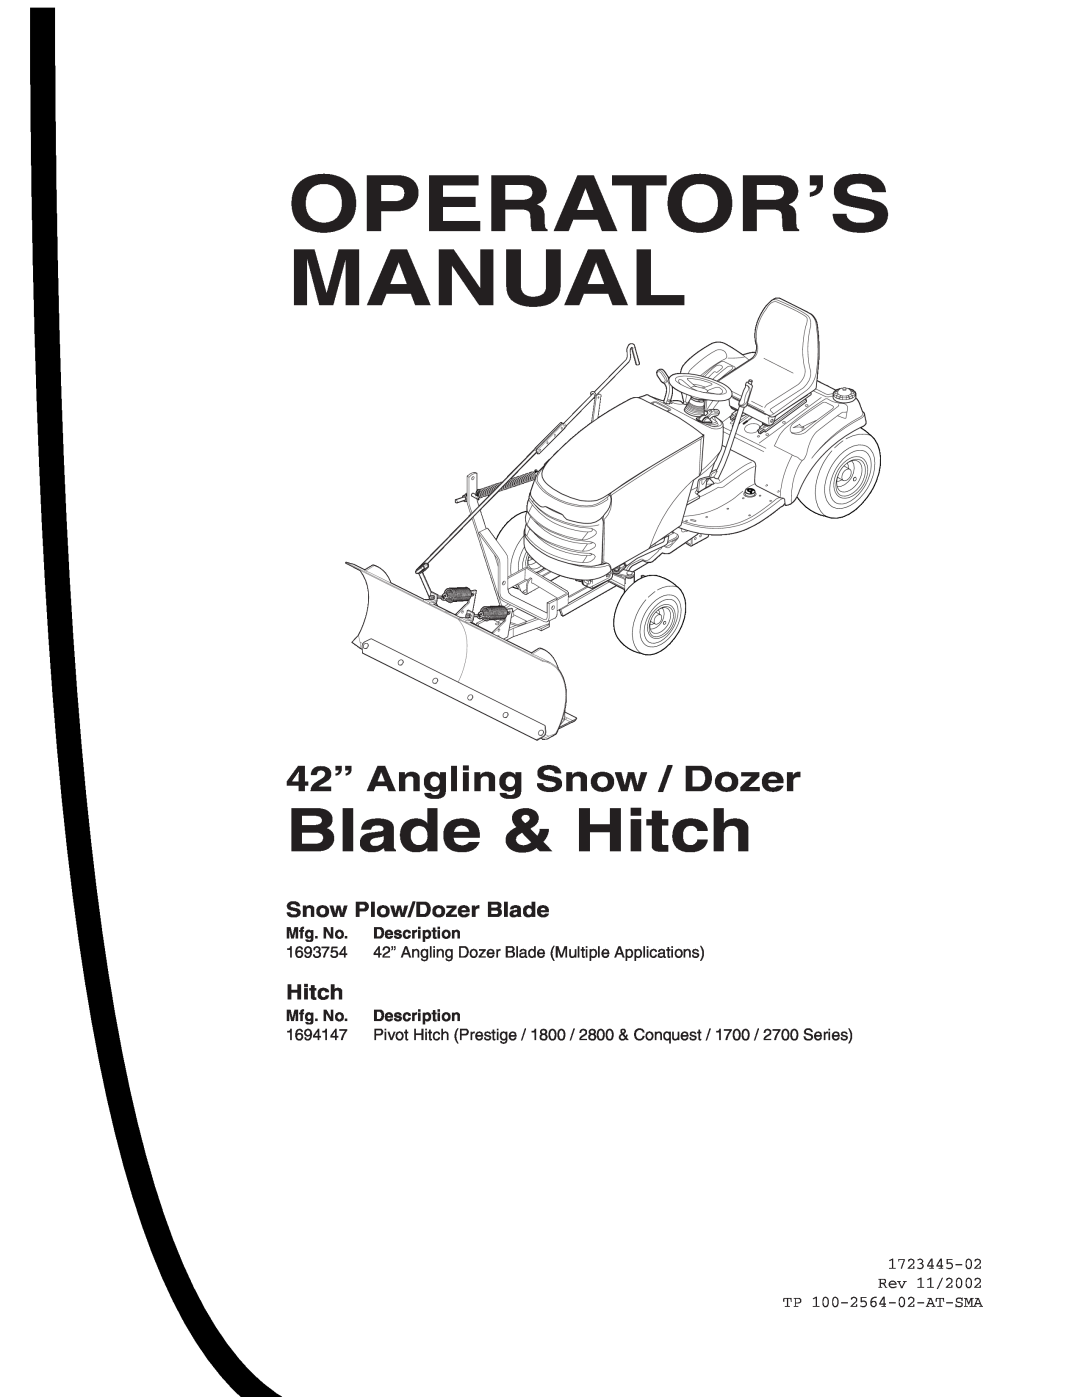 Snapper 1694147, 1723445-02 manual Snow Plow/Dozer Blade, Operator’S Manual, Blade & Hitch, 42” Angling Snow / Dozer 